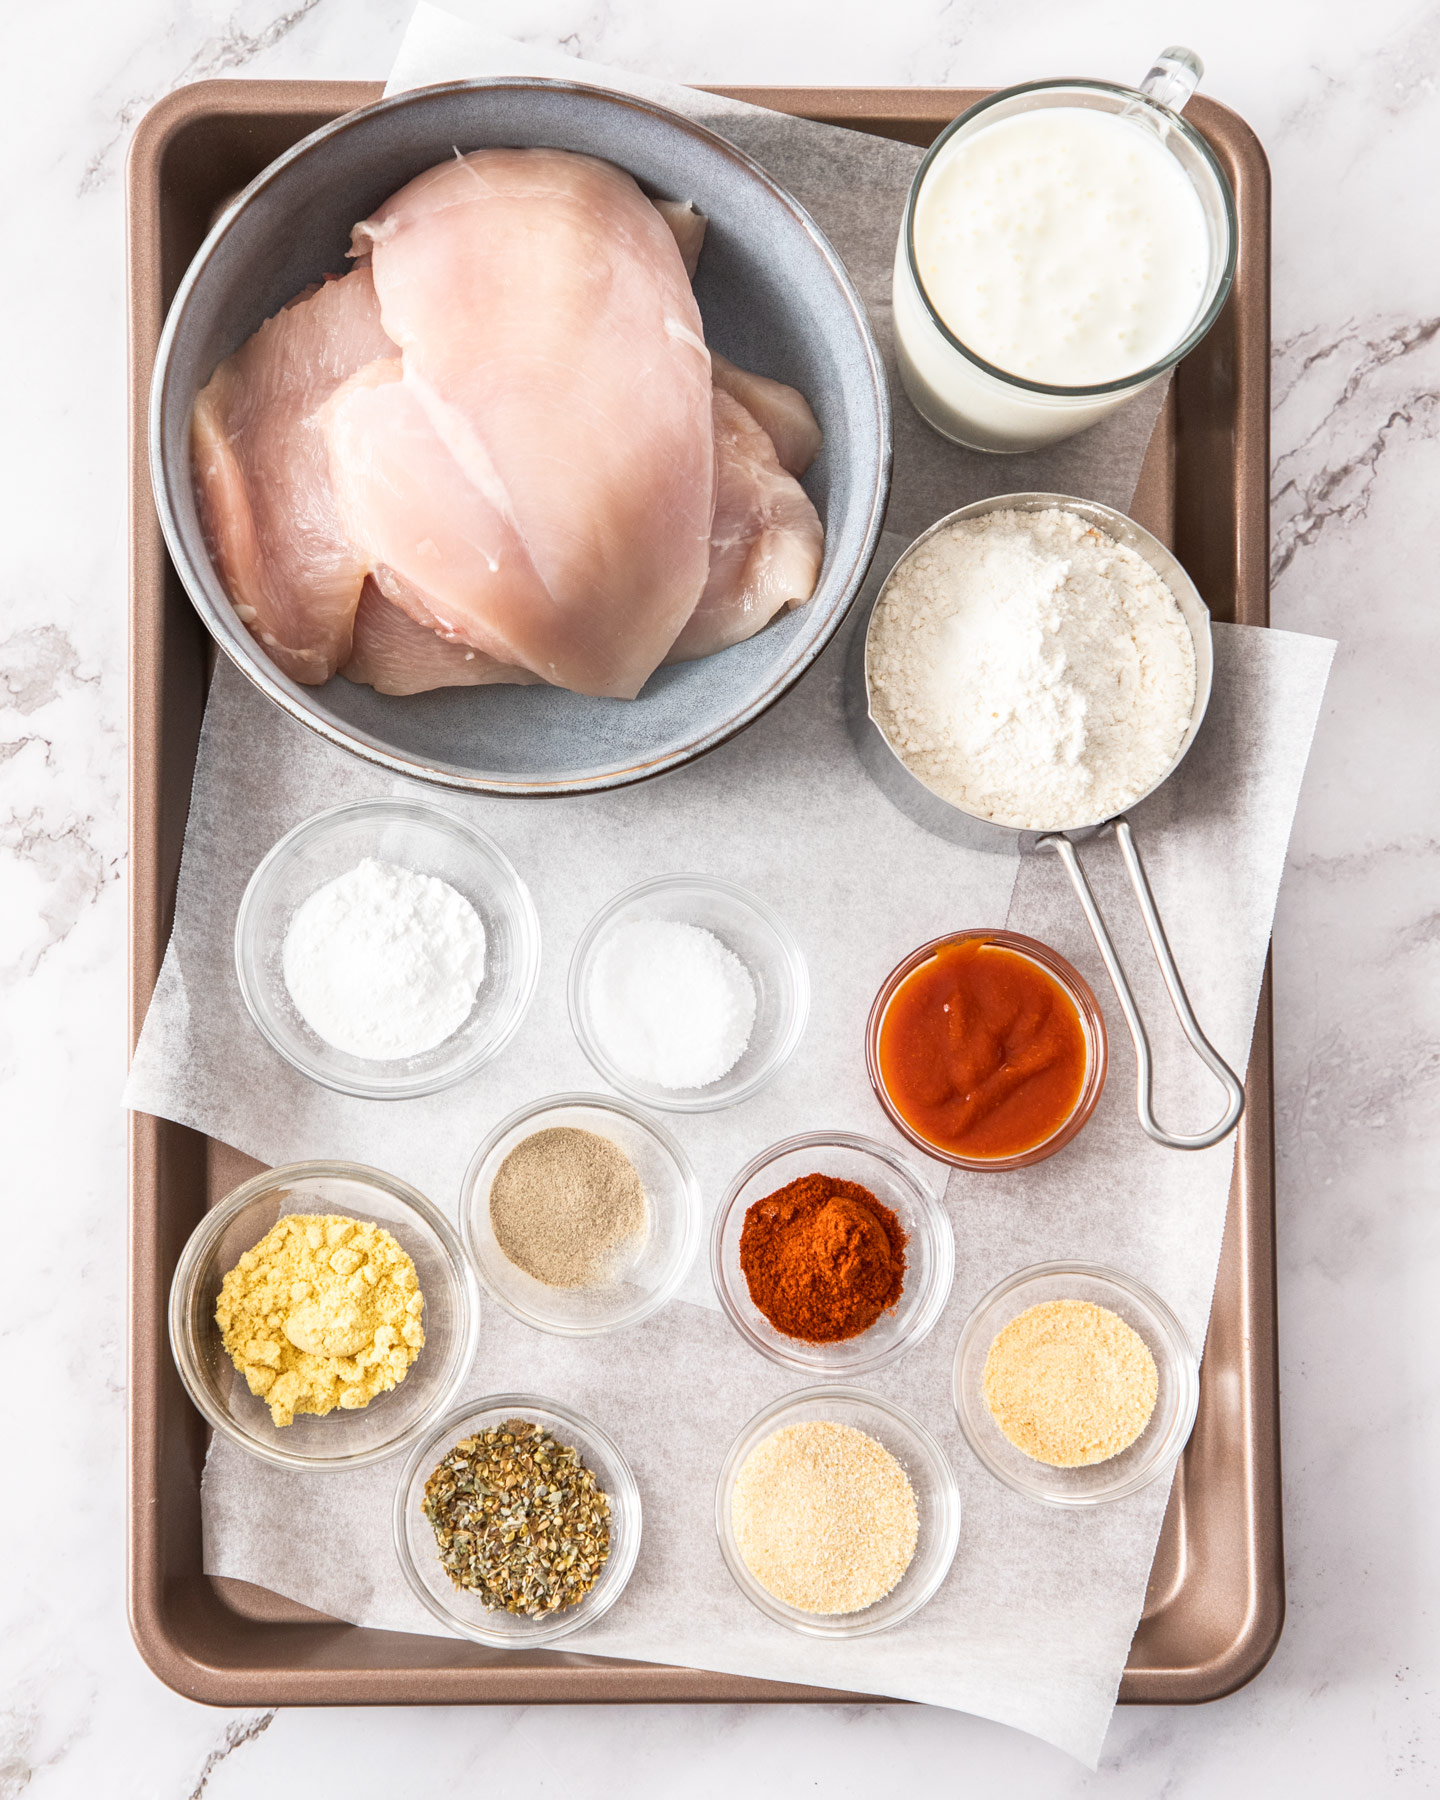 Ingredients for buttermilk fried chicken breasts.